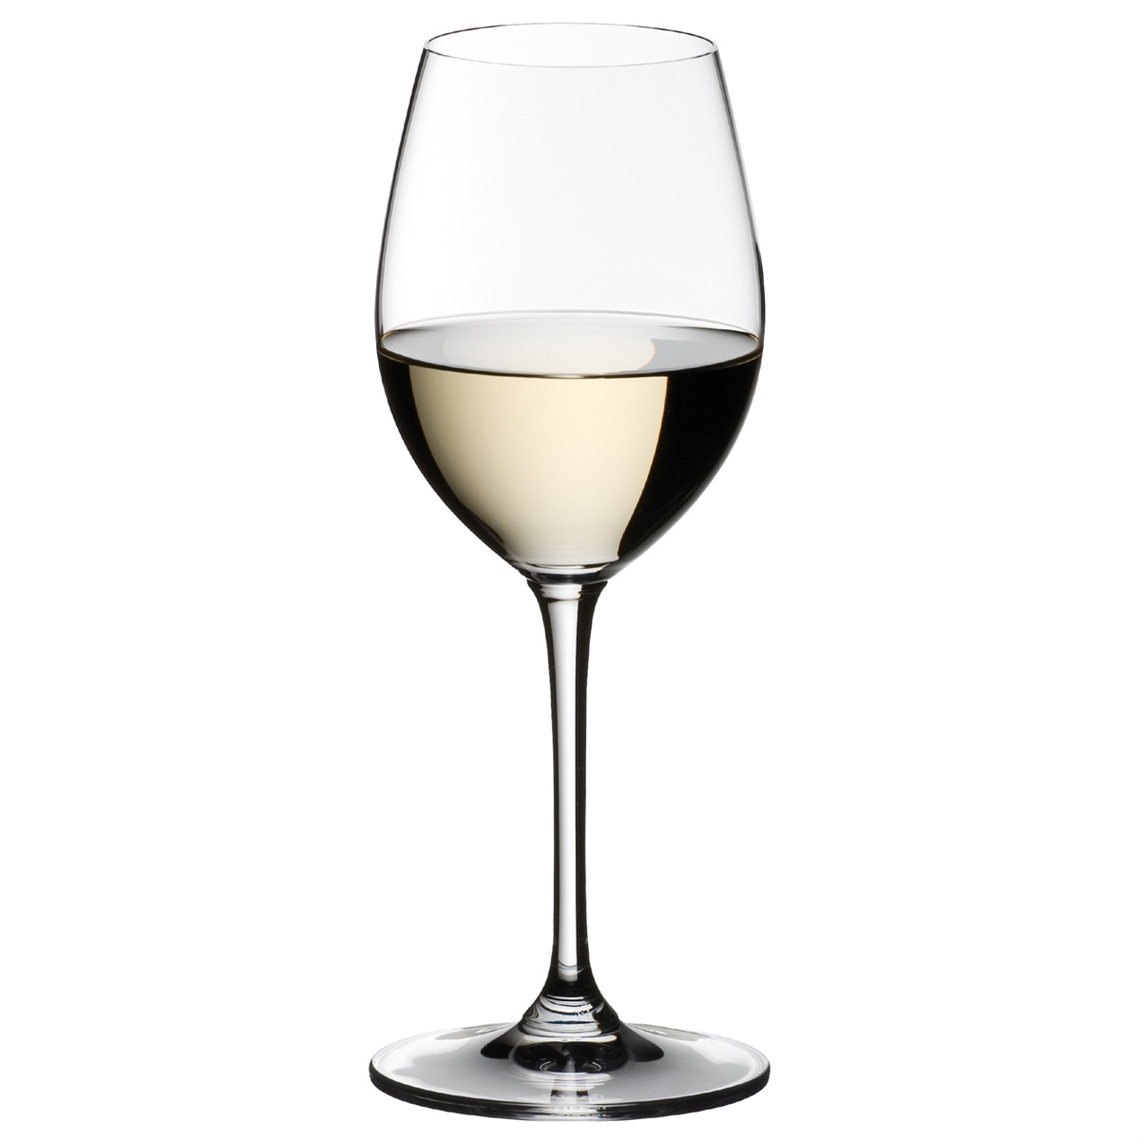 View more glassware from our Dessert Wine Glasses range